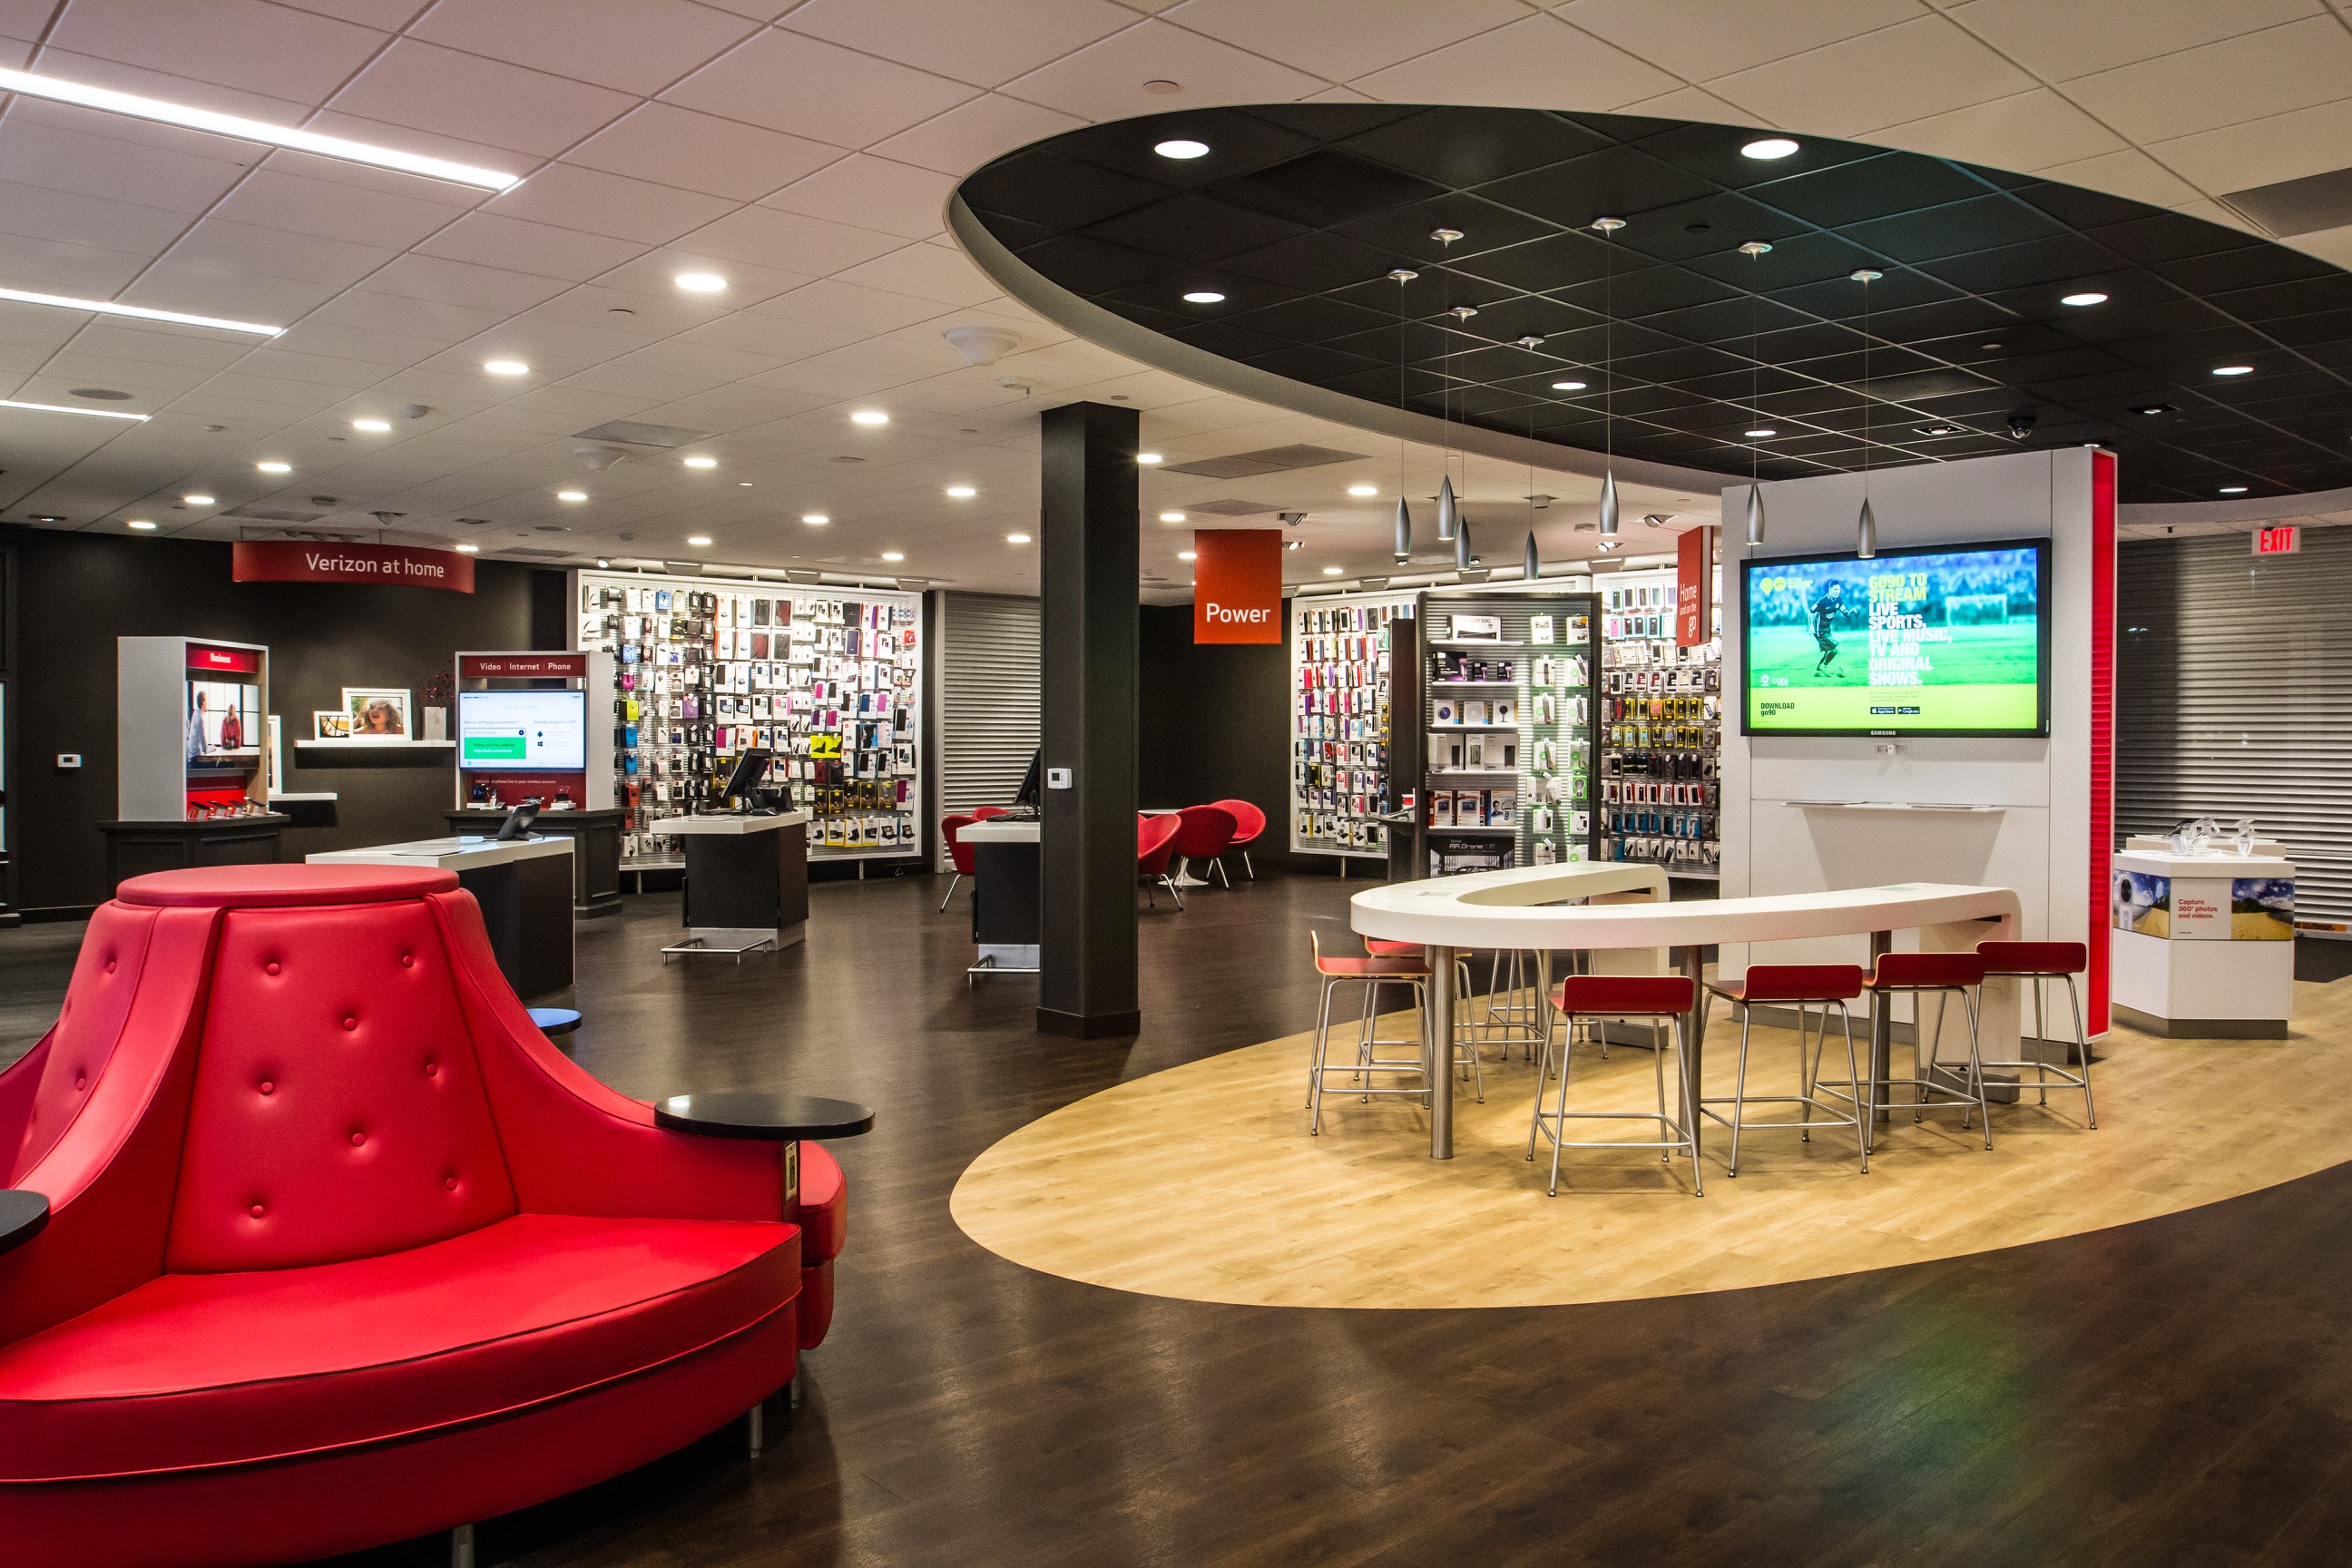 Verizon wireless shop interior view